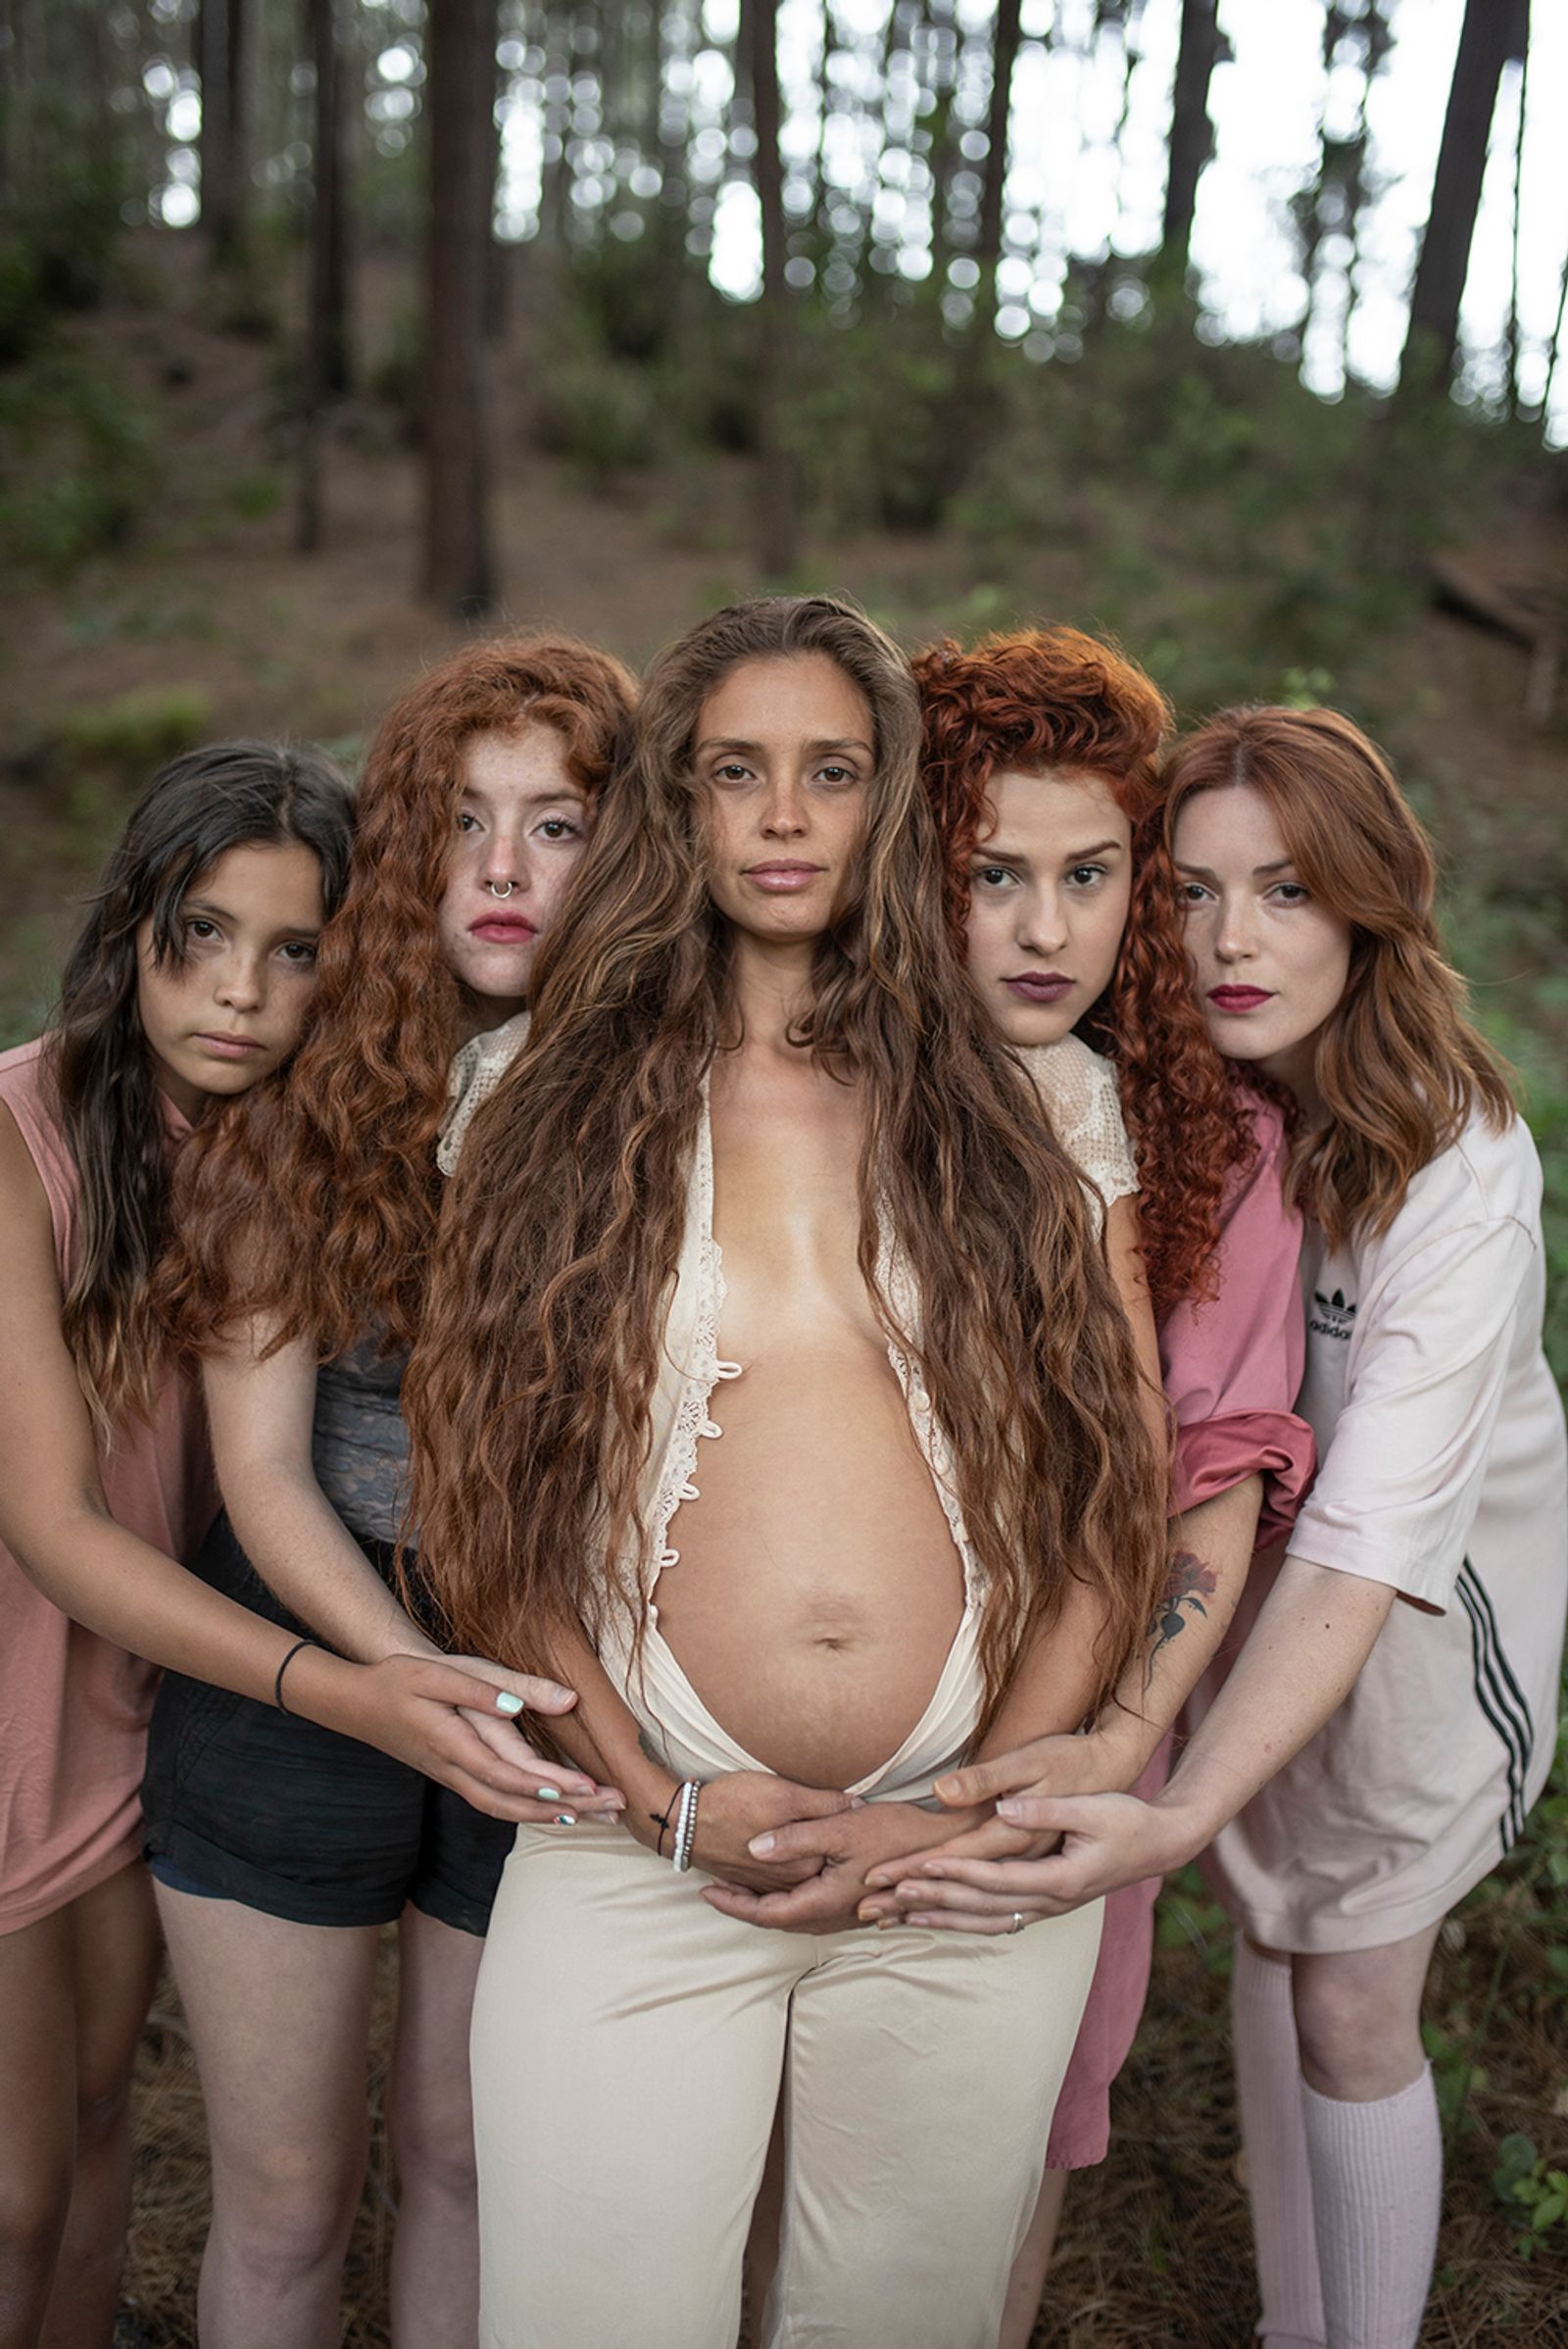 © Paz Olivares droguett - Image from the Sexualidades femeninas photography project